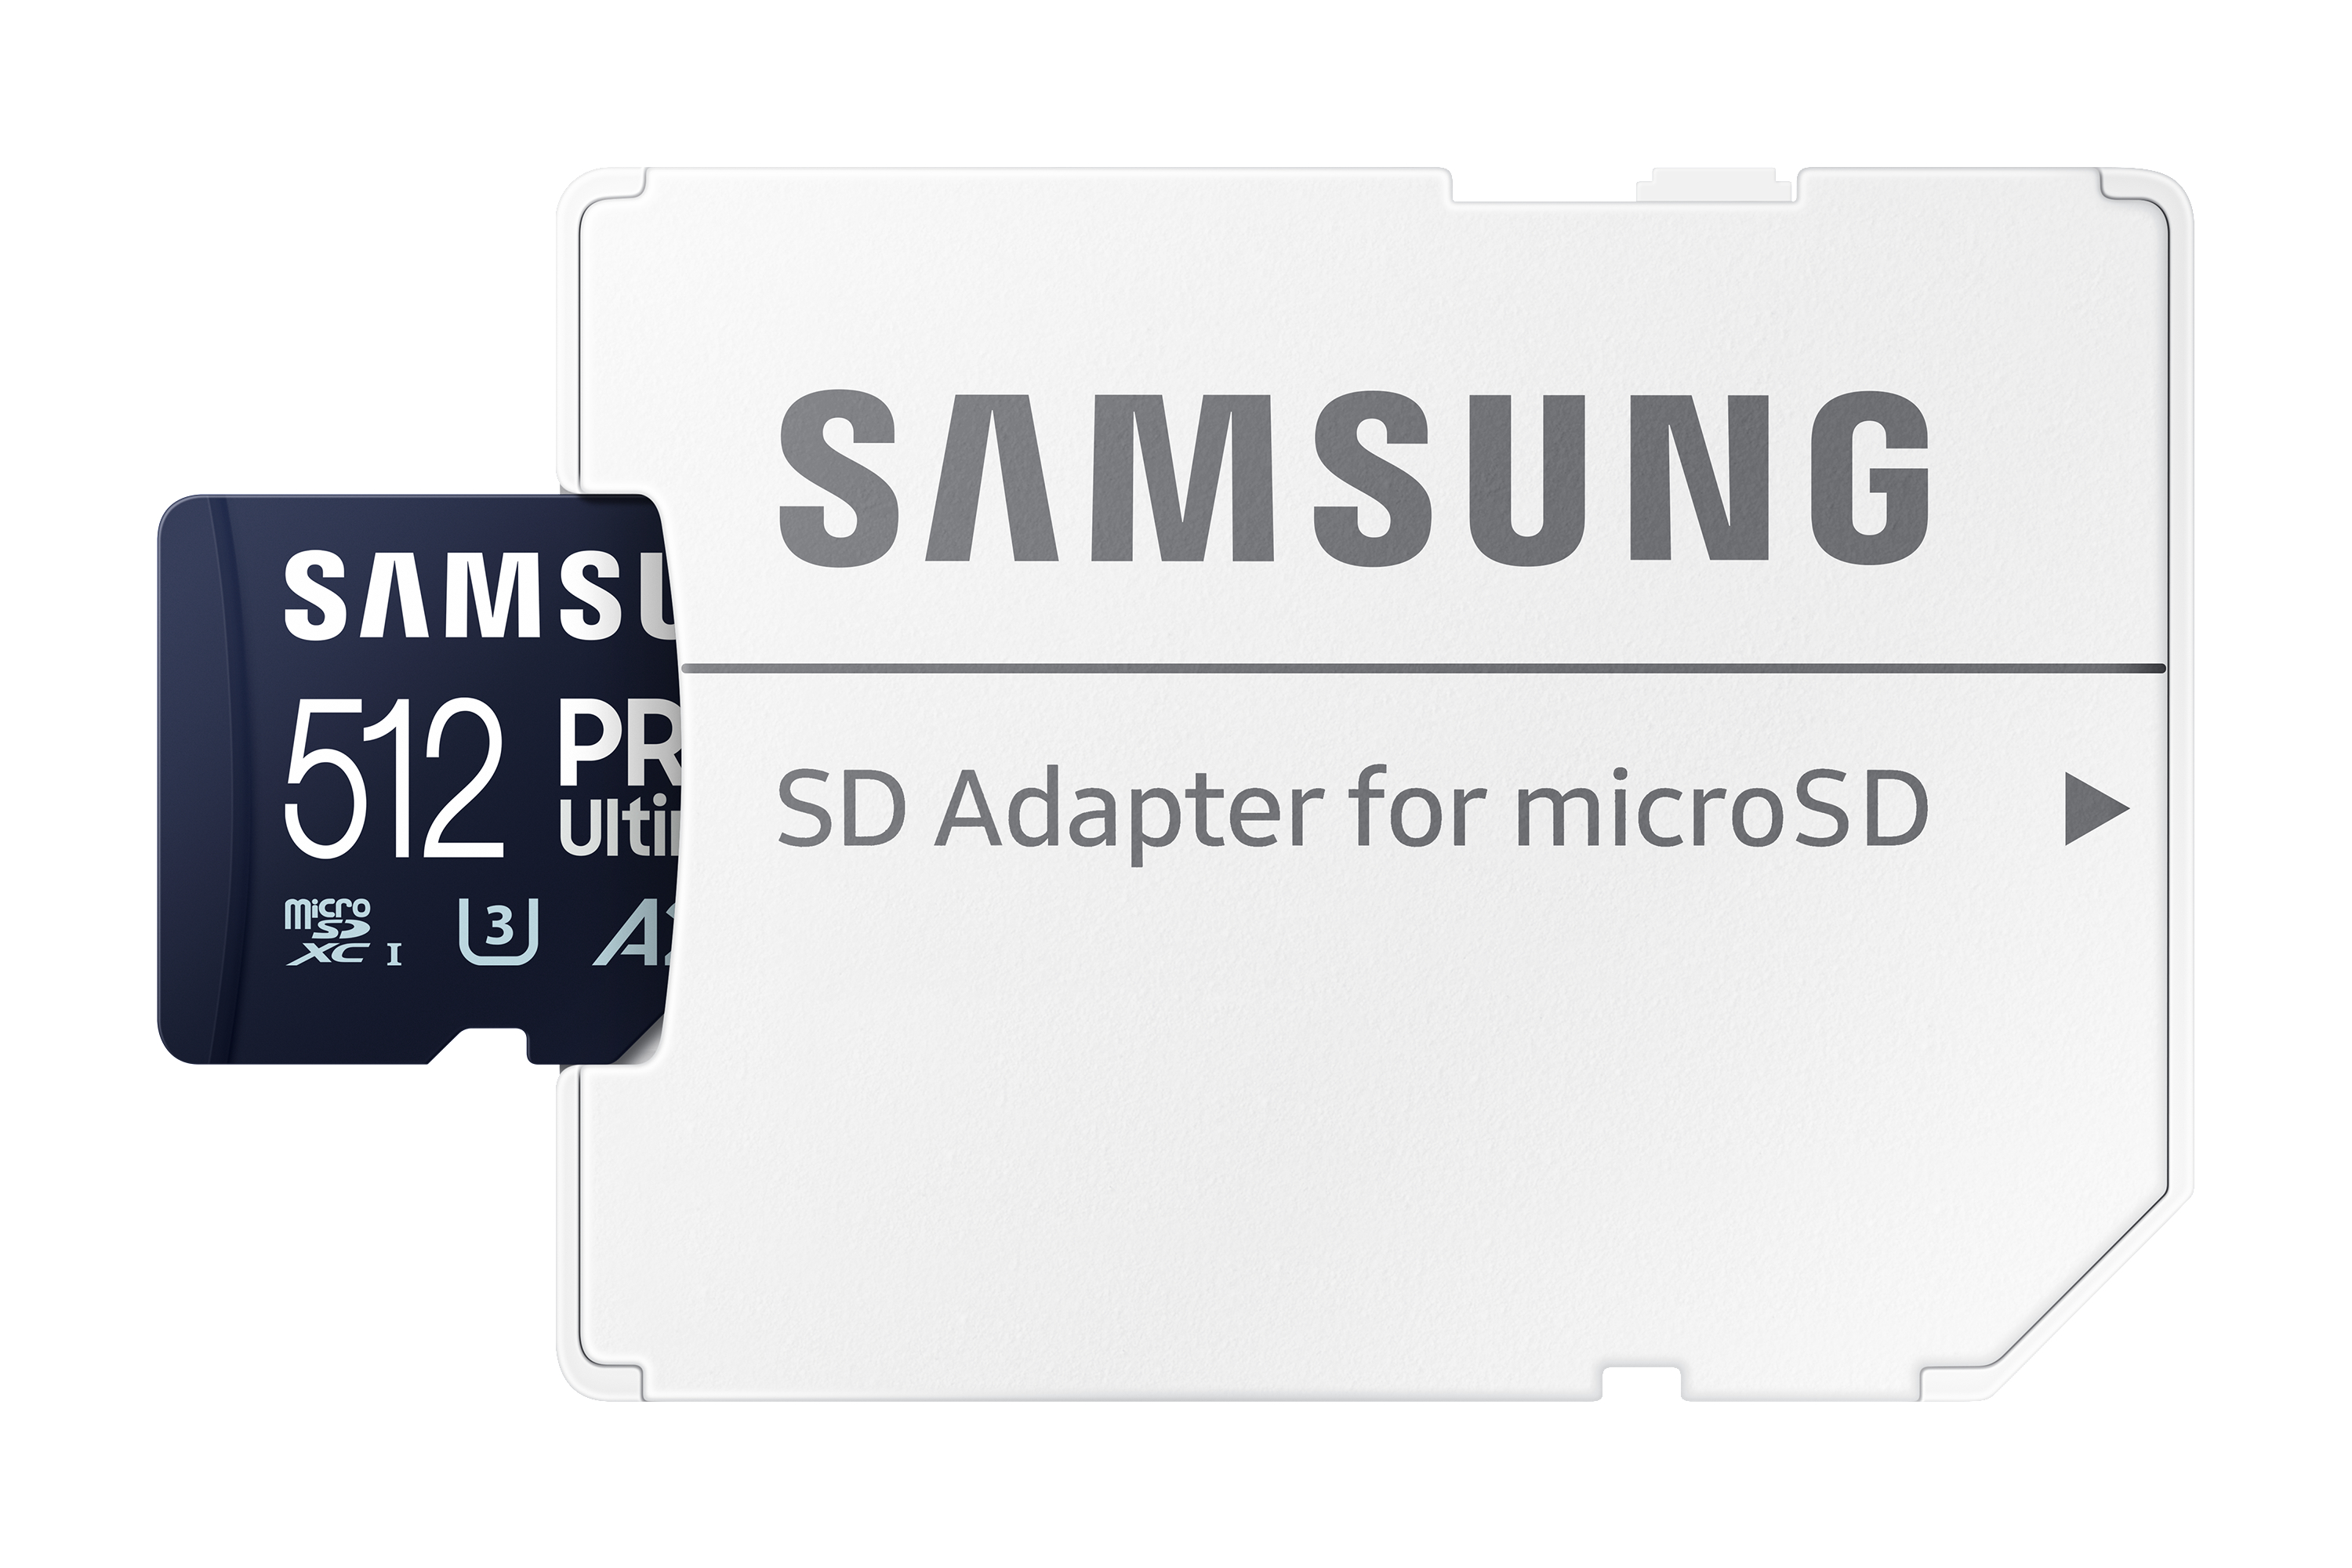 SAMSUNG PRO Ultimate, Micro-SD Speicherkarte, 512 MB/s 200 GB